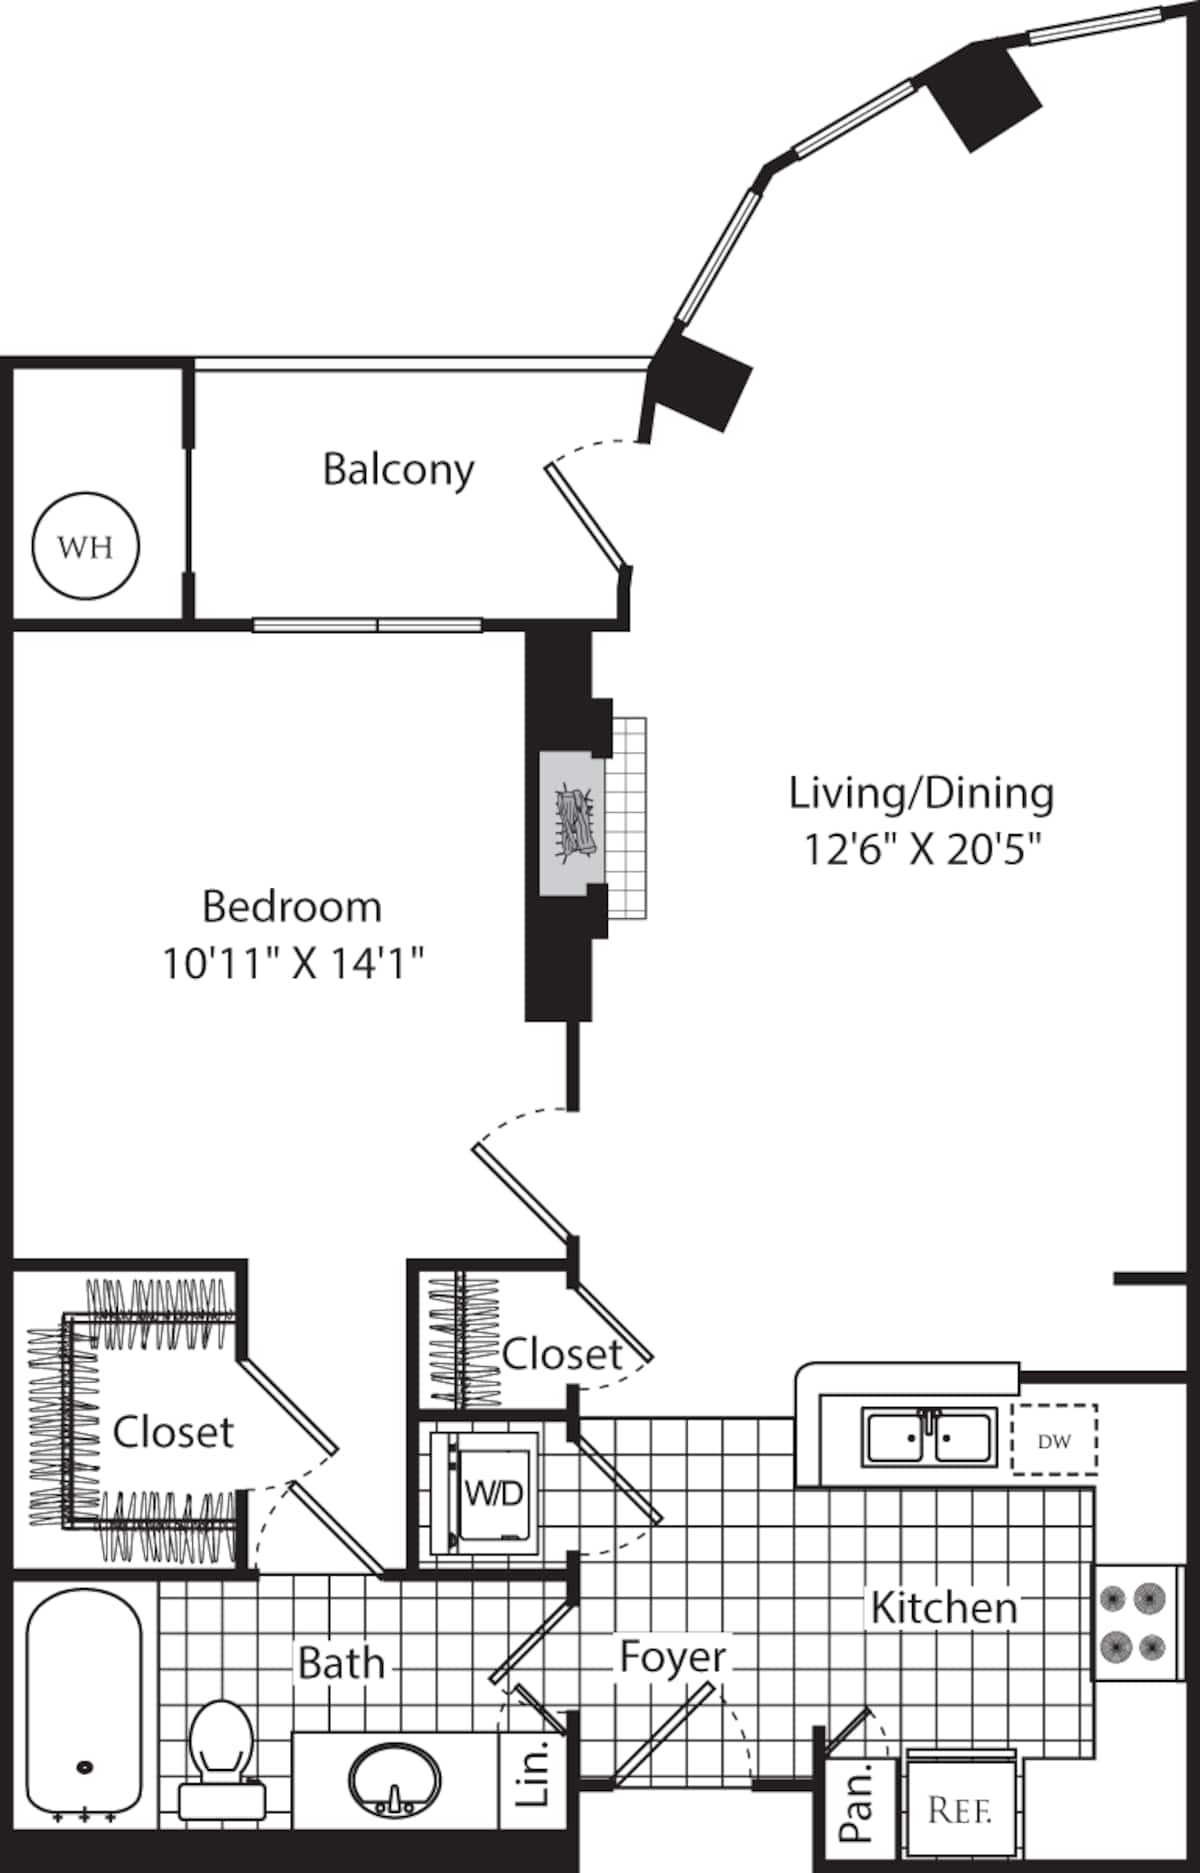 Floorplan diagram for B4, showing 1 bedroom